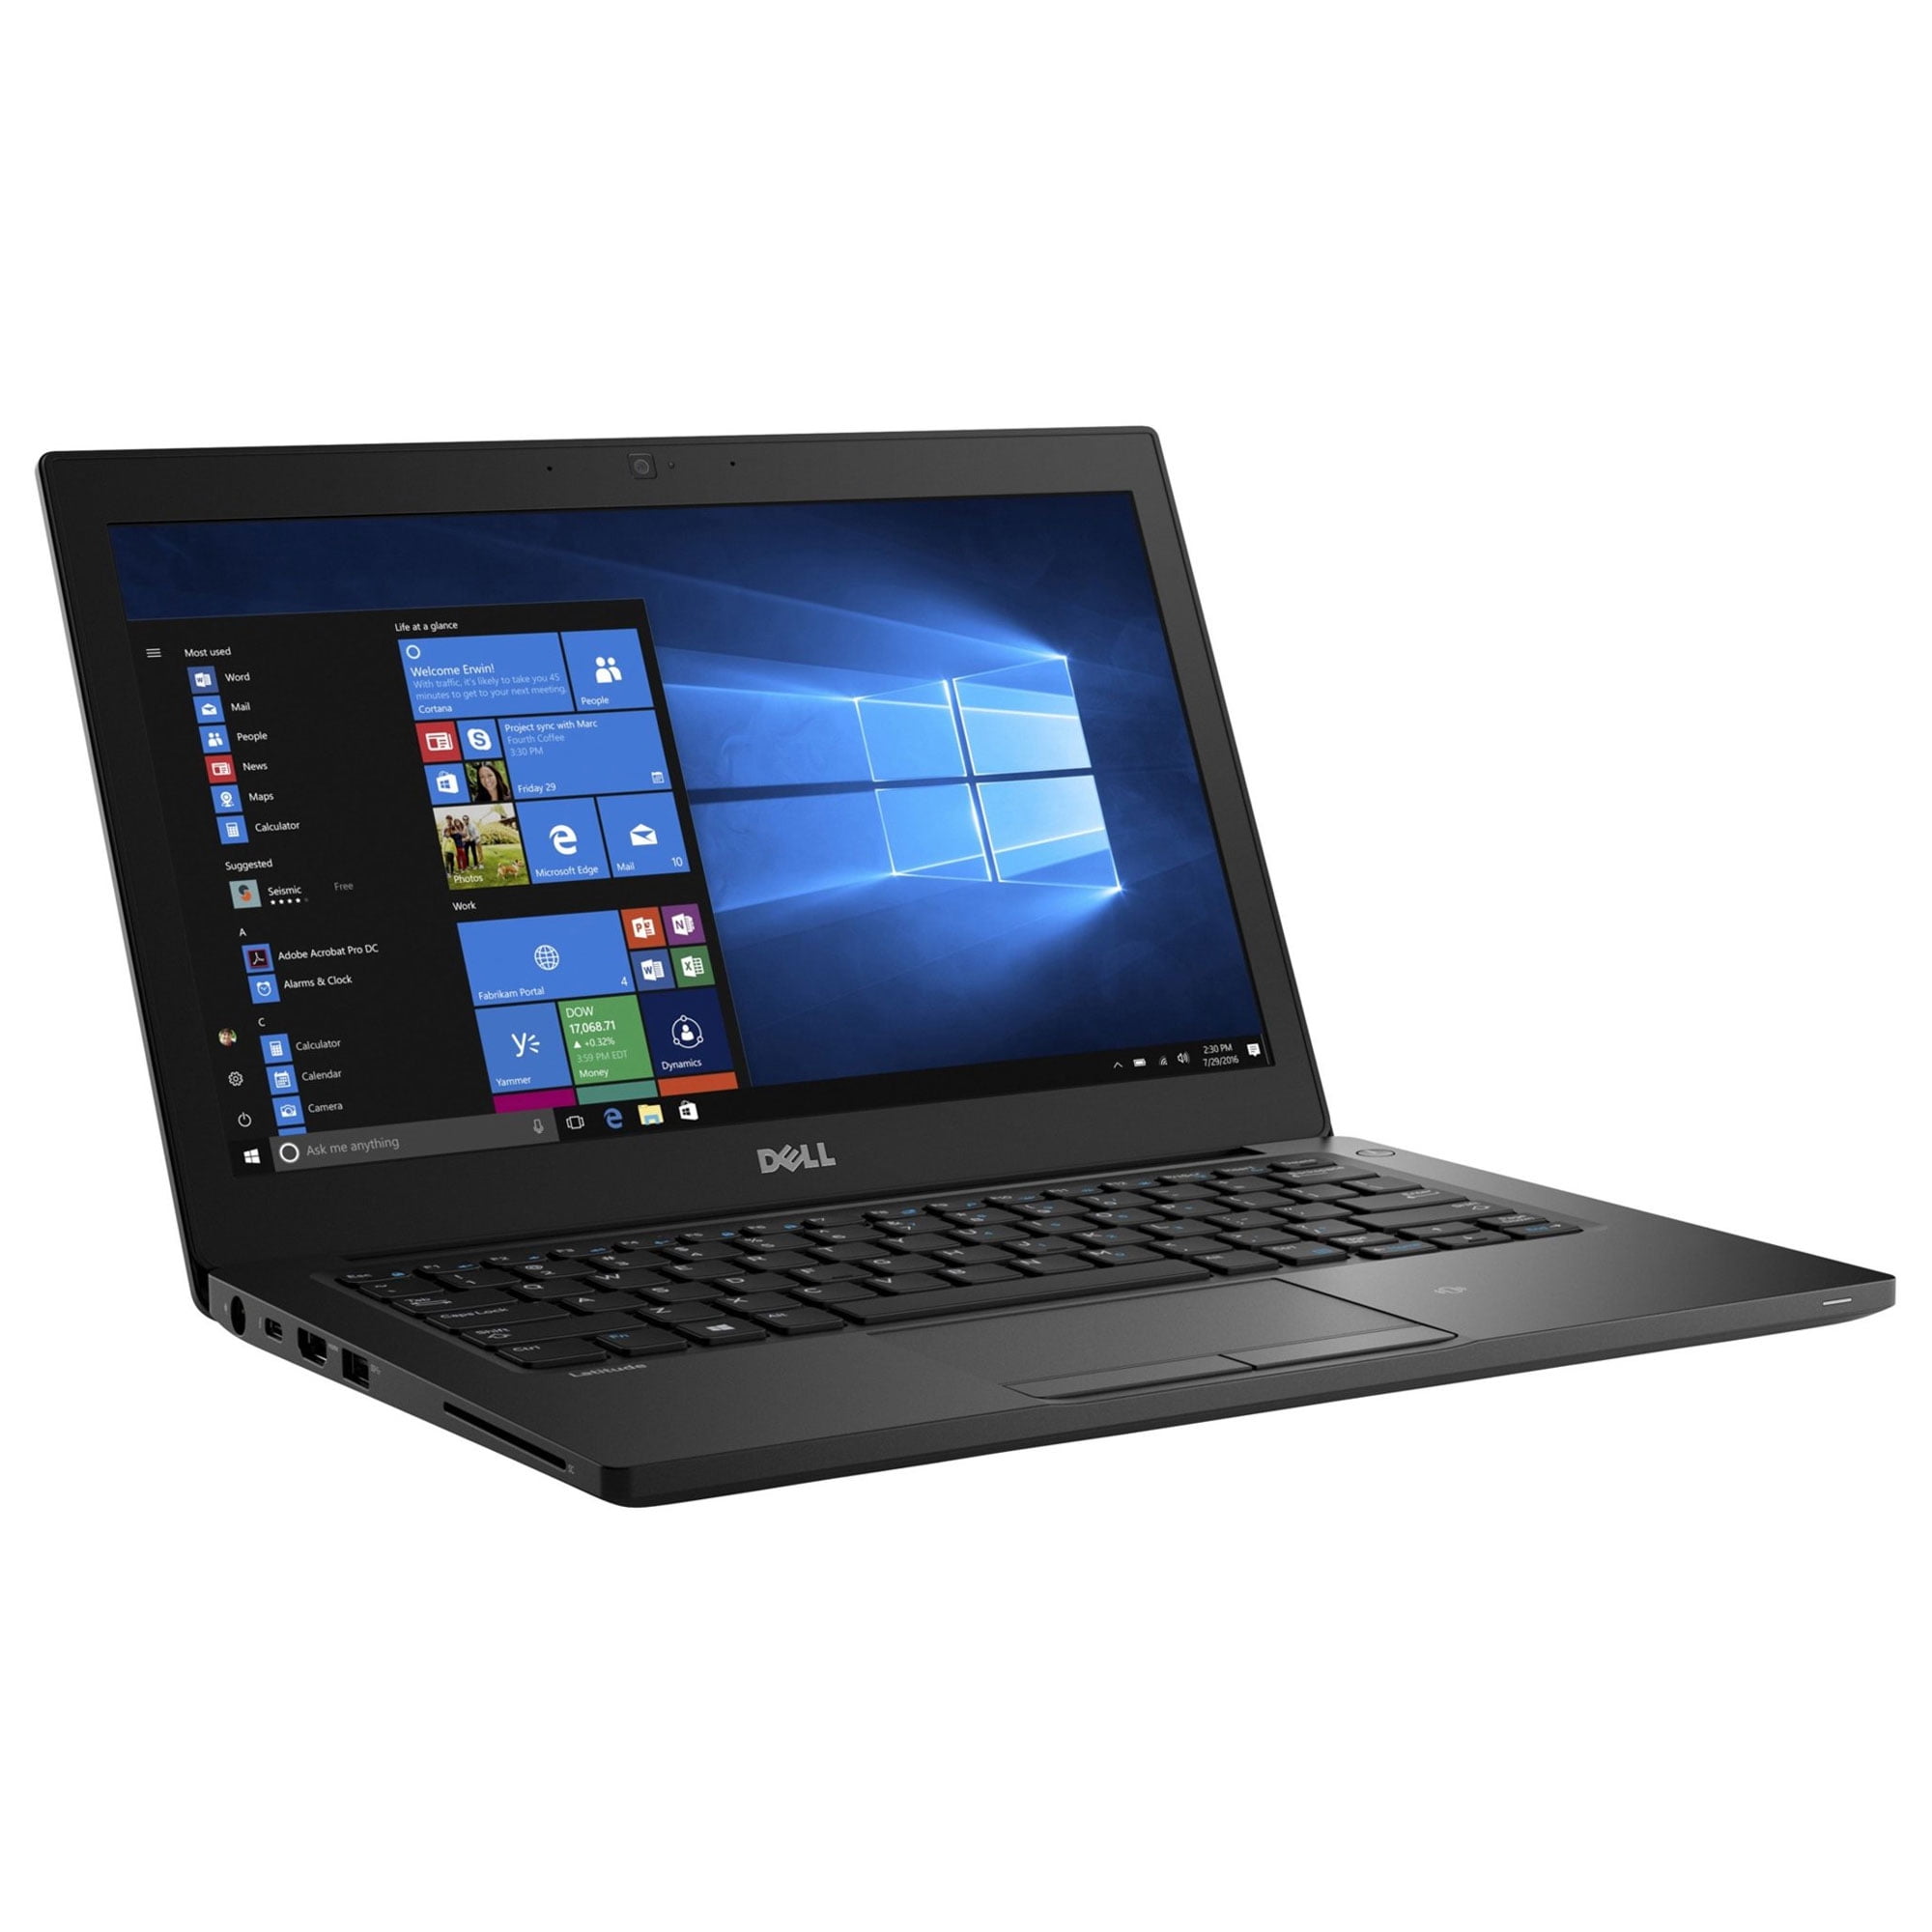 Dell Latitude 7280 Used Laptop, 3.9GHz Intel Core i7 7th 16GB RAM, 256GB SSD, 12.5" FHD Screen, WiFi, Bluetooth, Windows 10 (Used-like New) - Walmart.com